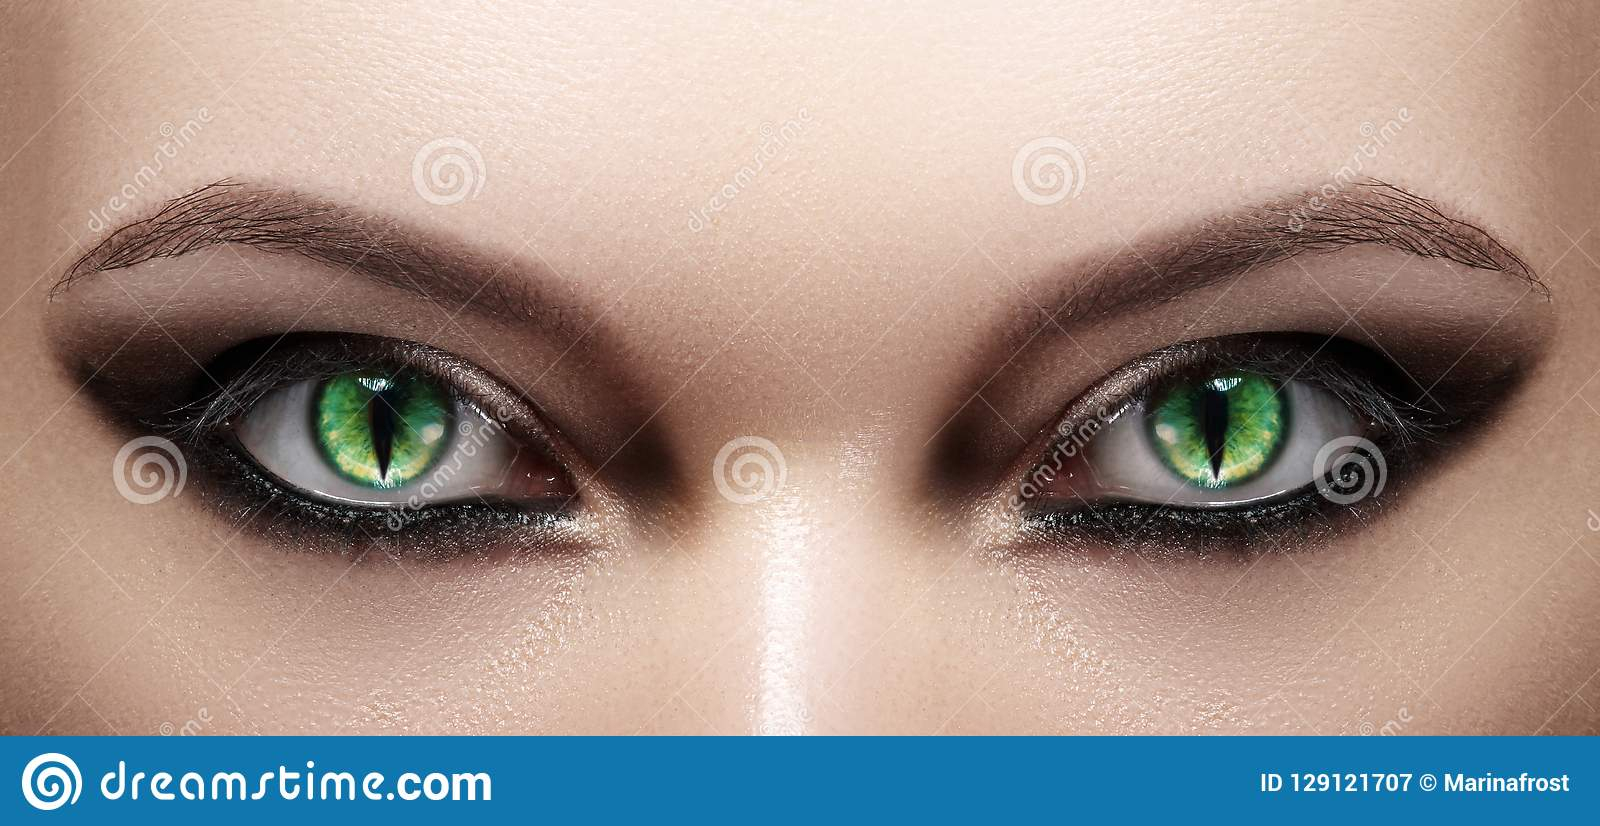 Cat Eye Makeup For Halloween Close Up Of Woman Eyes Halloween Makeup Cat Eye Lens Fashion